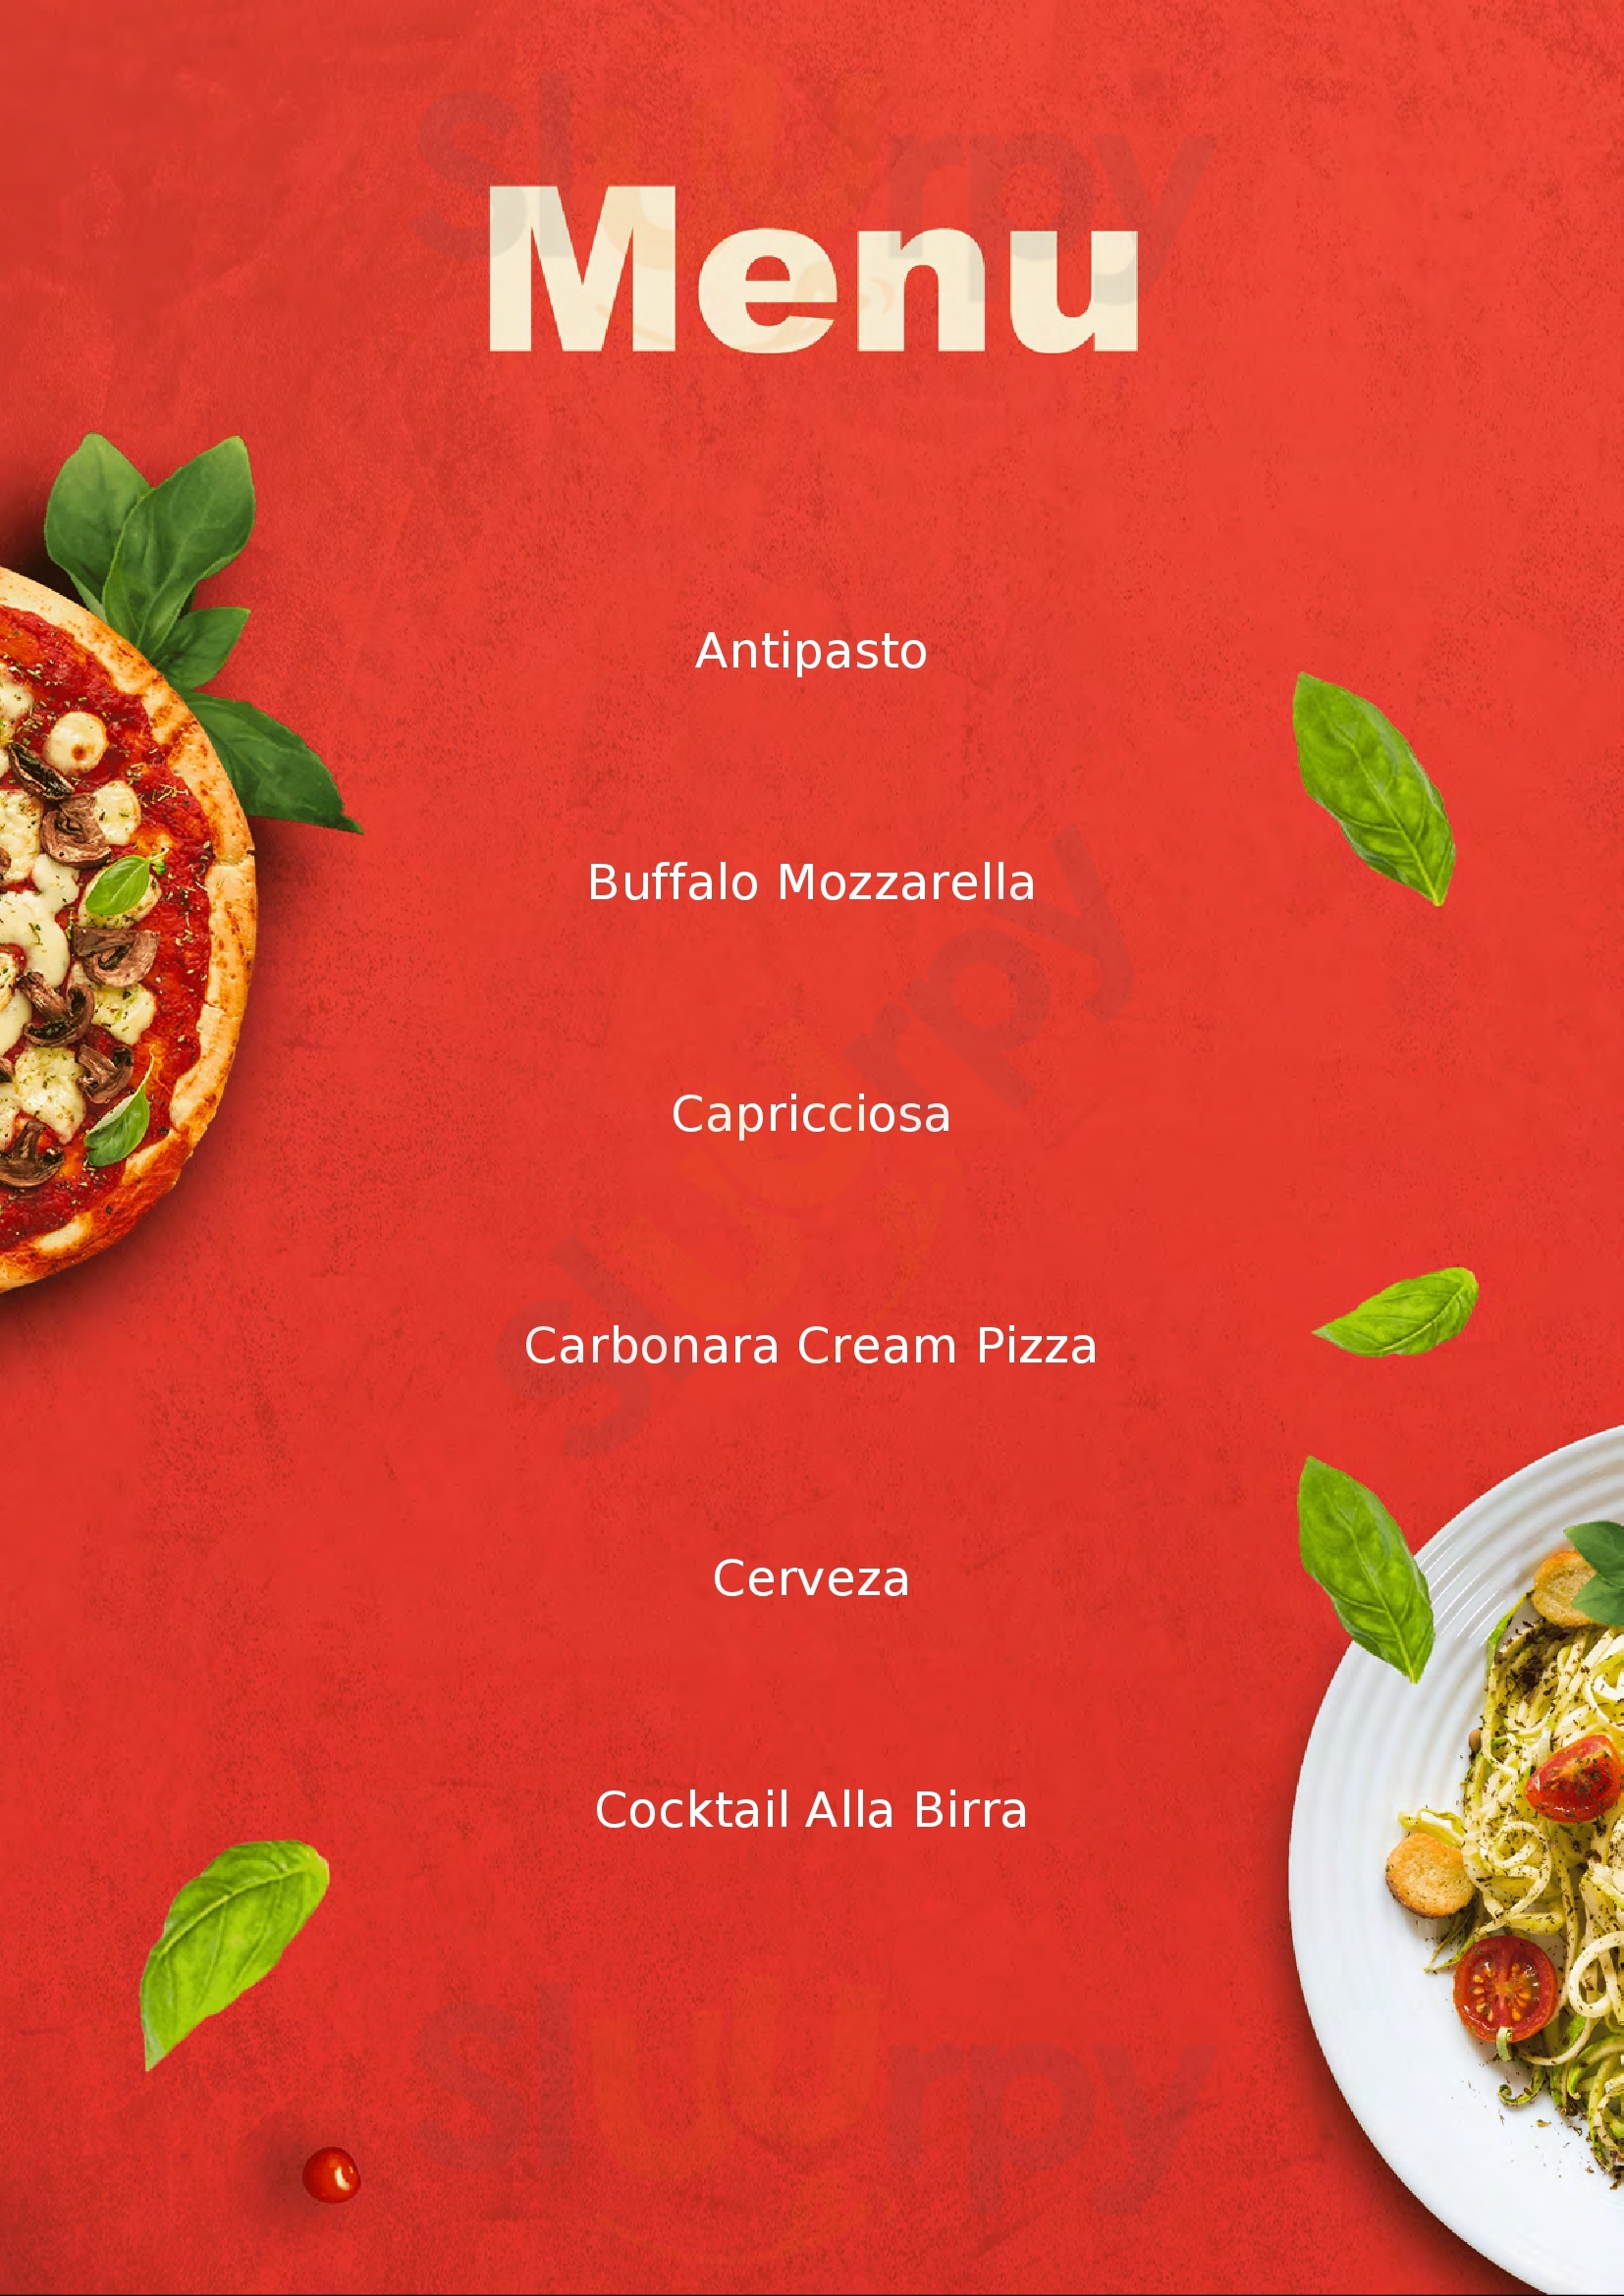 Varnelli Pizza Bistrot & Restaurant Pompei menù 1 pagina